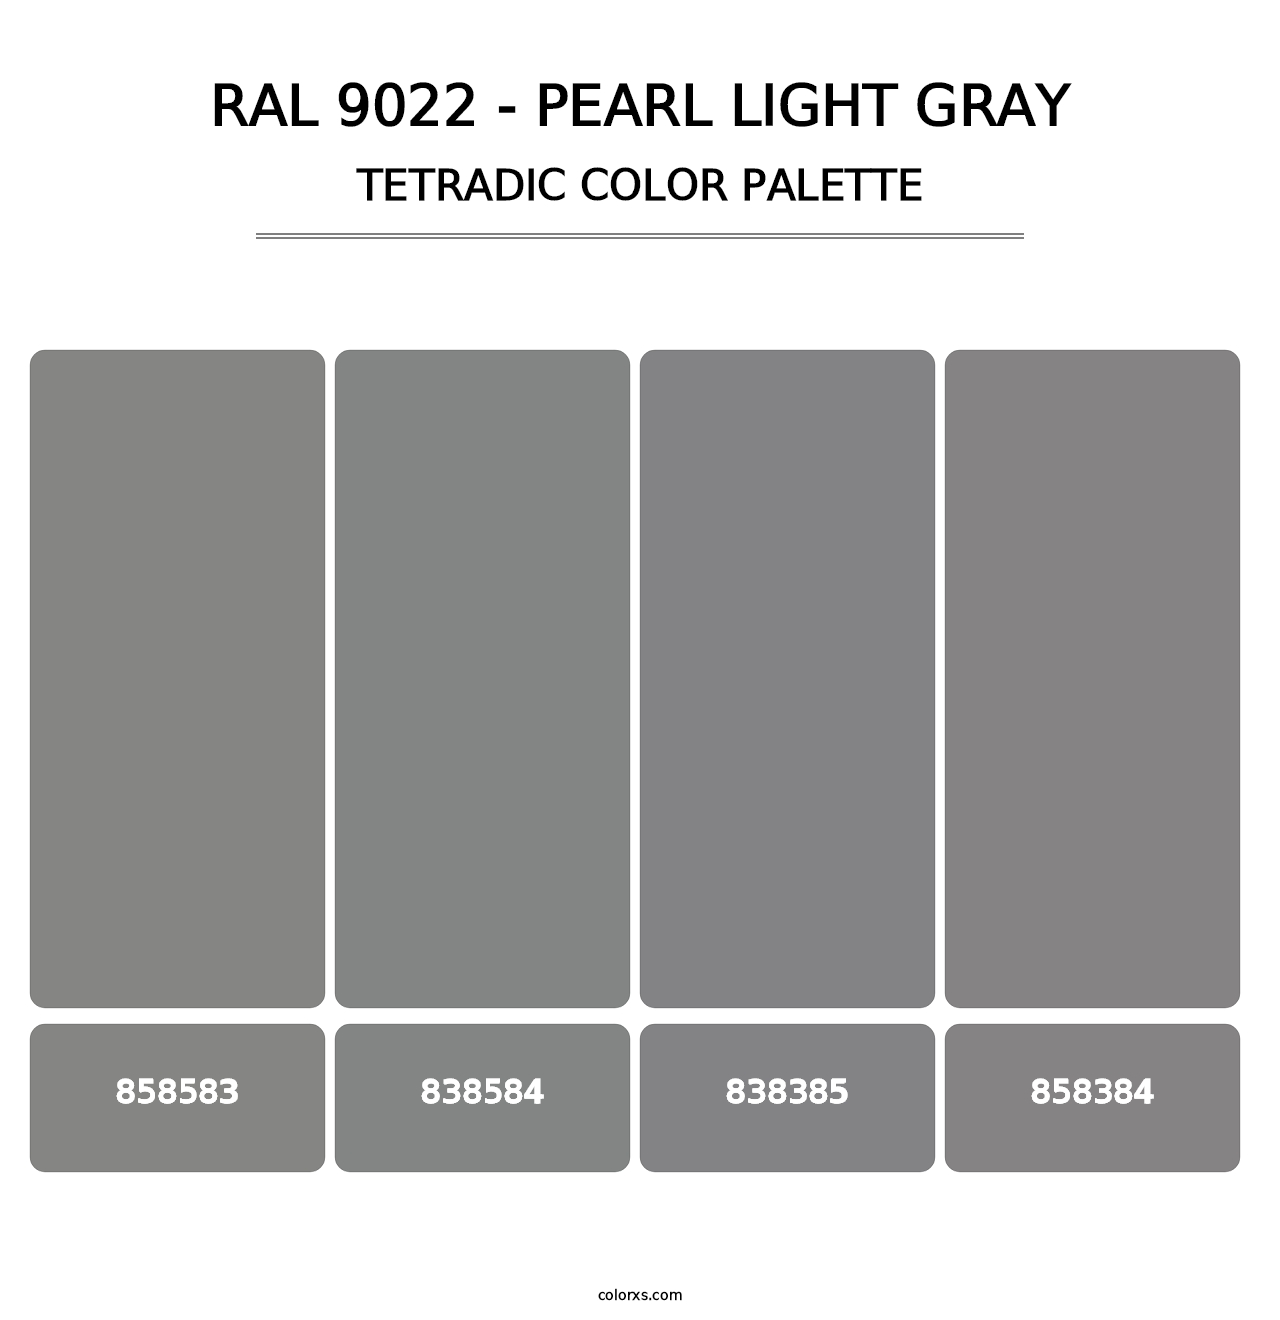 RAL 9022 - Pearl Light Gray - Tetradic Color Palette